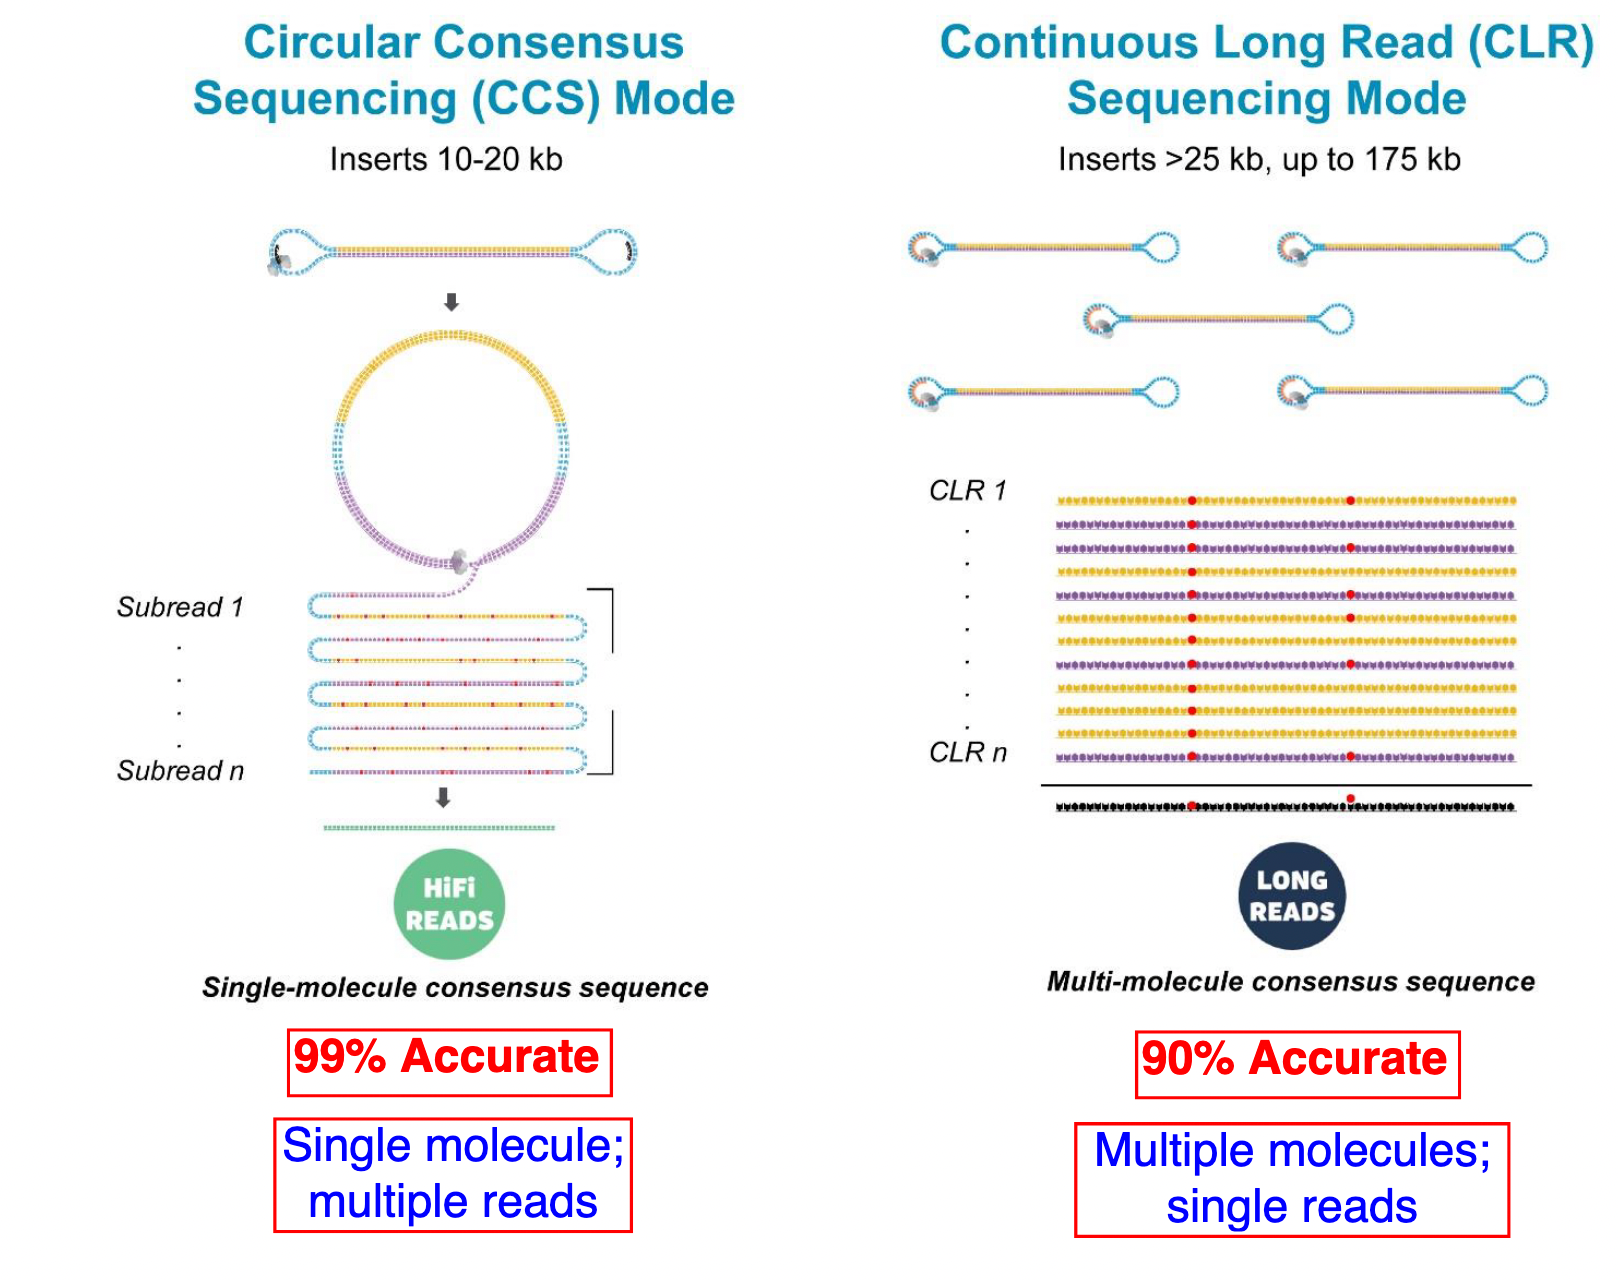 Comparison between PacBio HiFi and CLR sequencing methods